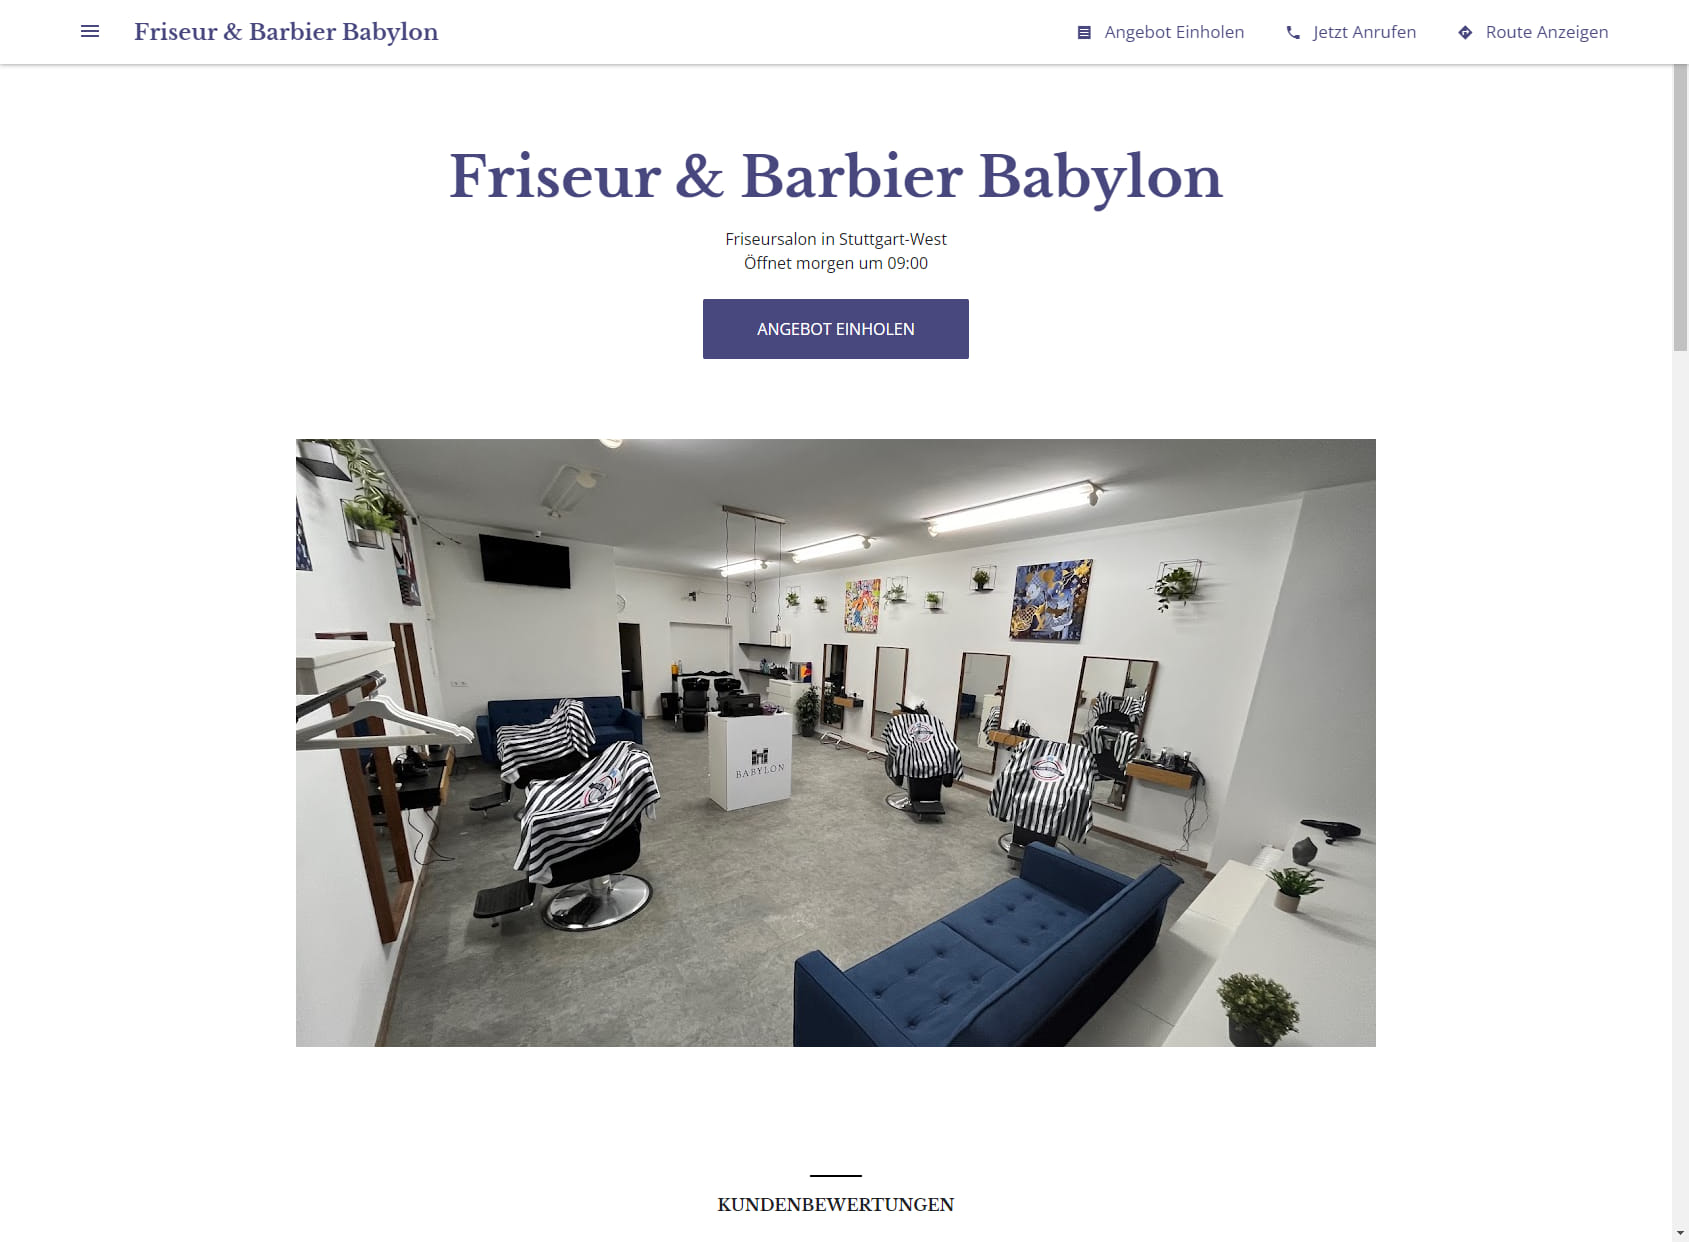 Friseur & Barbier Babylon